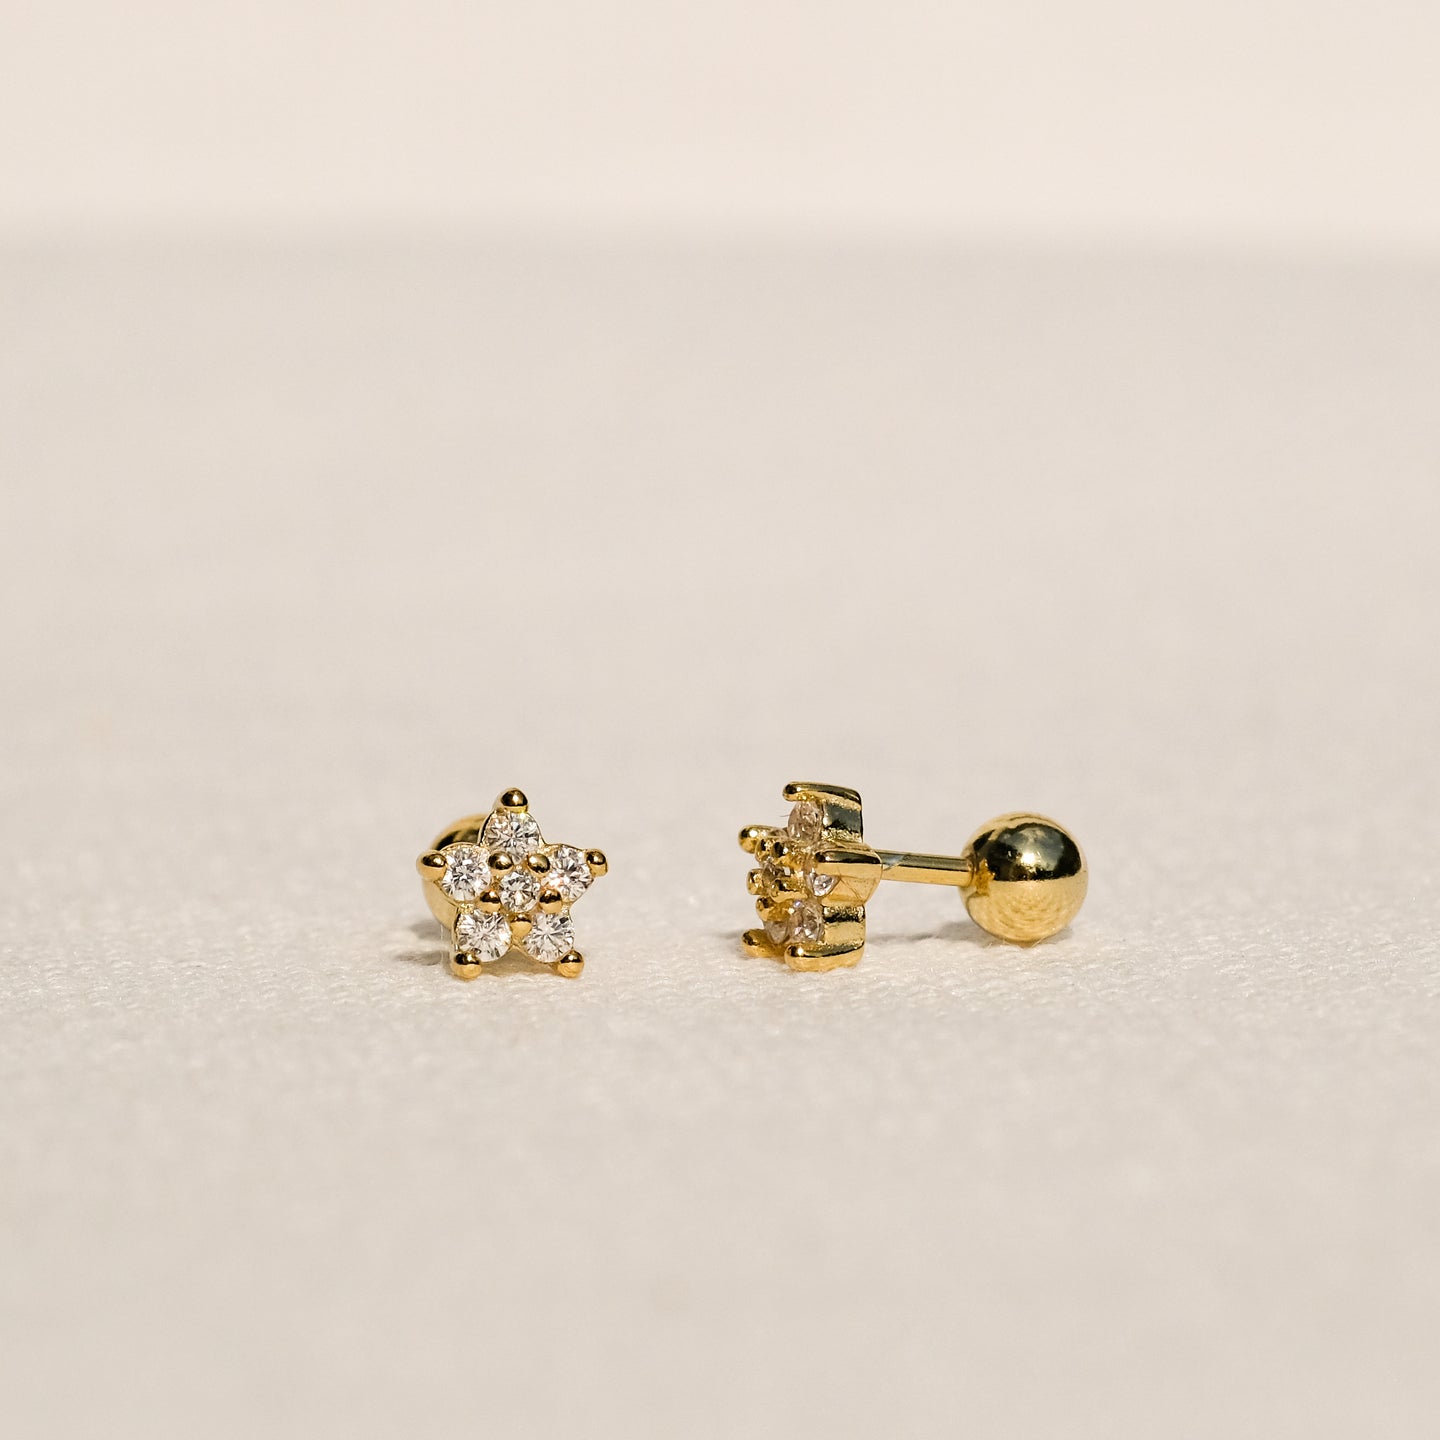 products/dela-cz-stud-earrings-18k-gold-vermeil-1.jpg